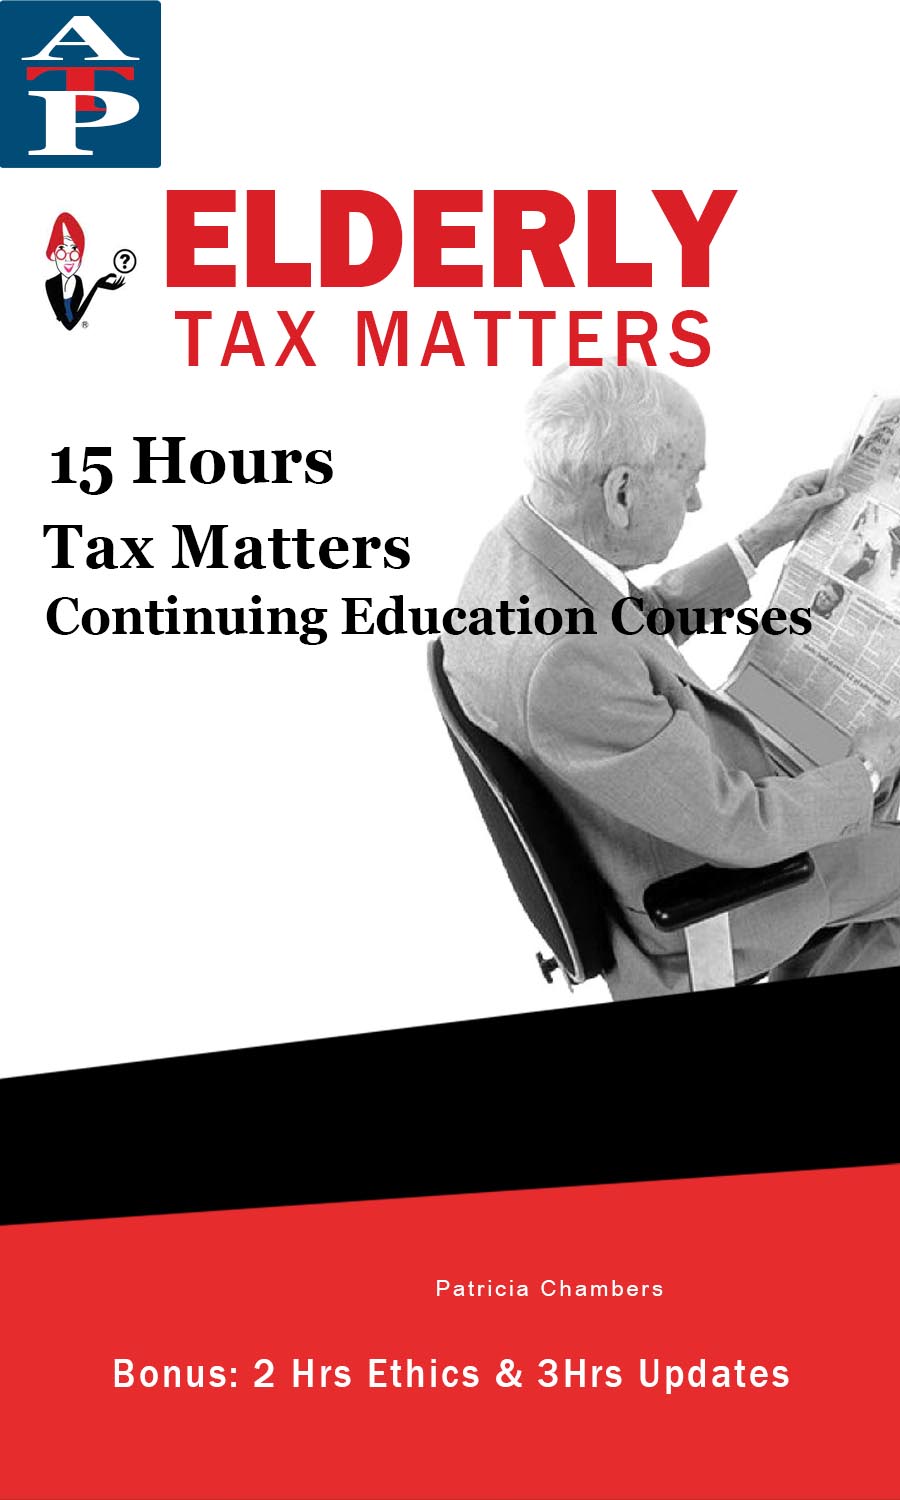 IRS Elderly Tax Matters Education Class